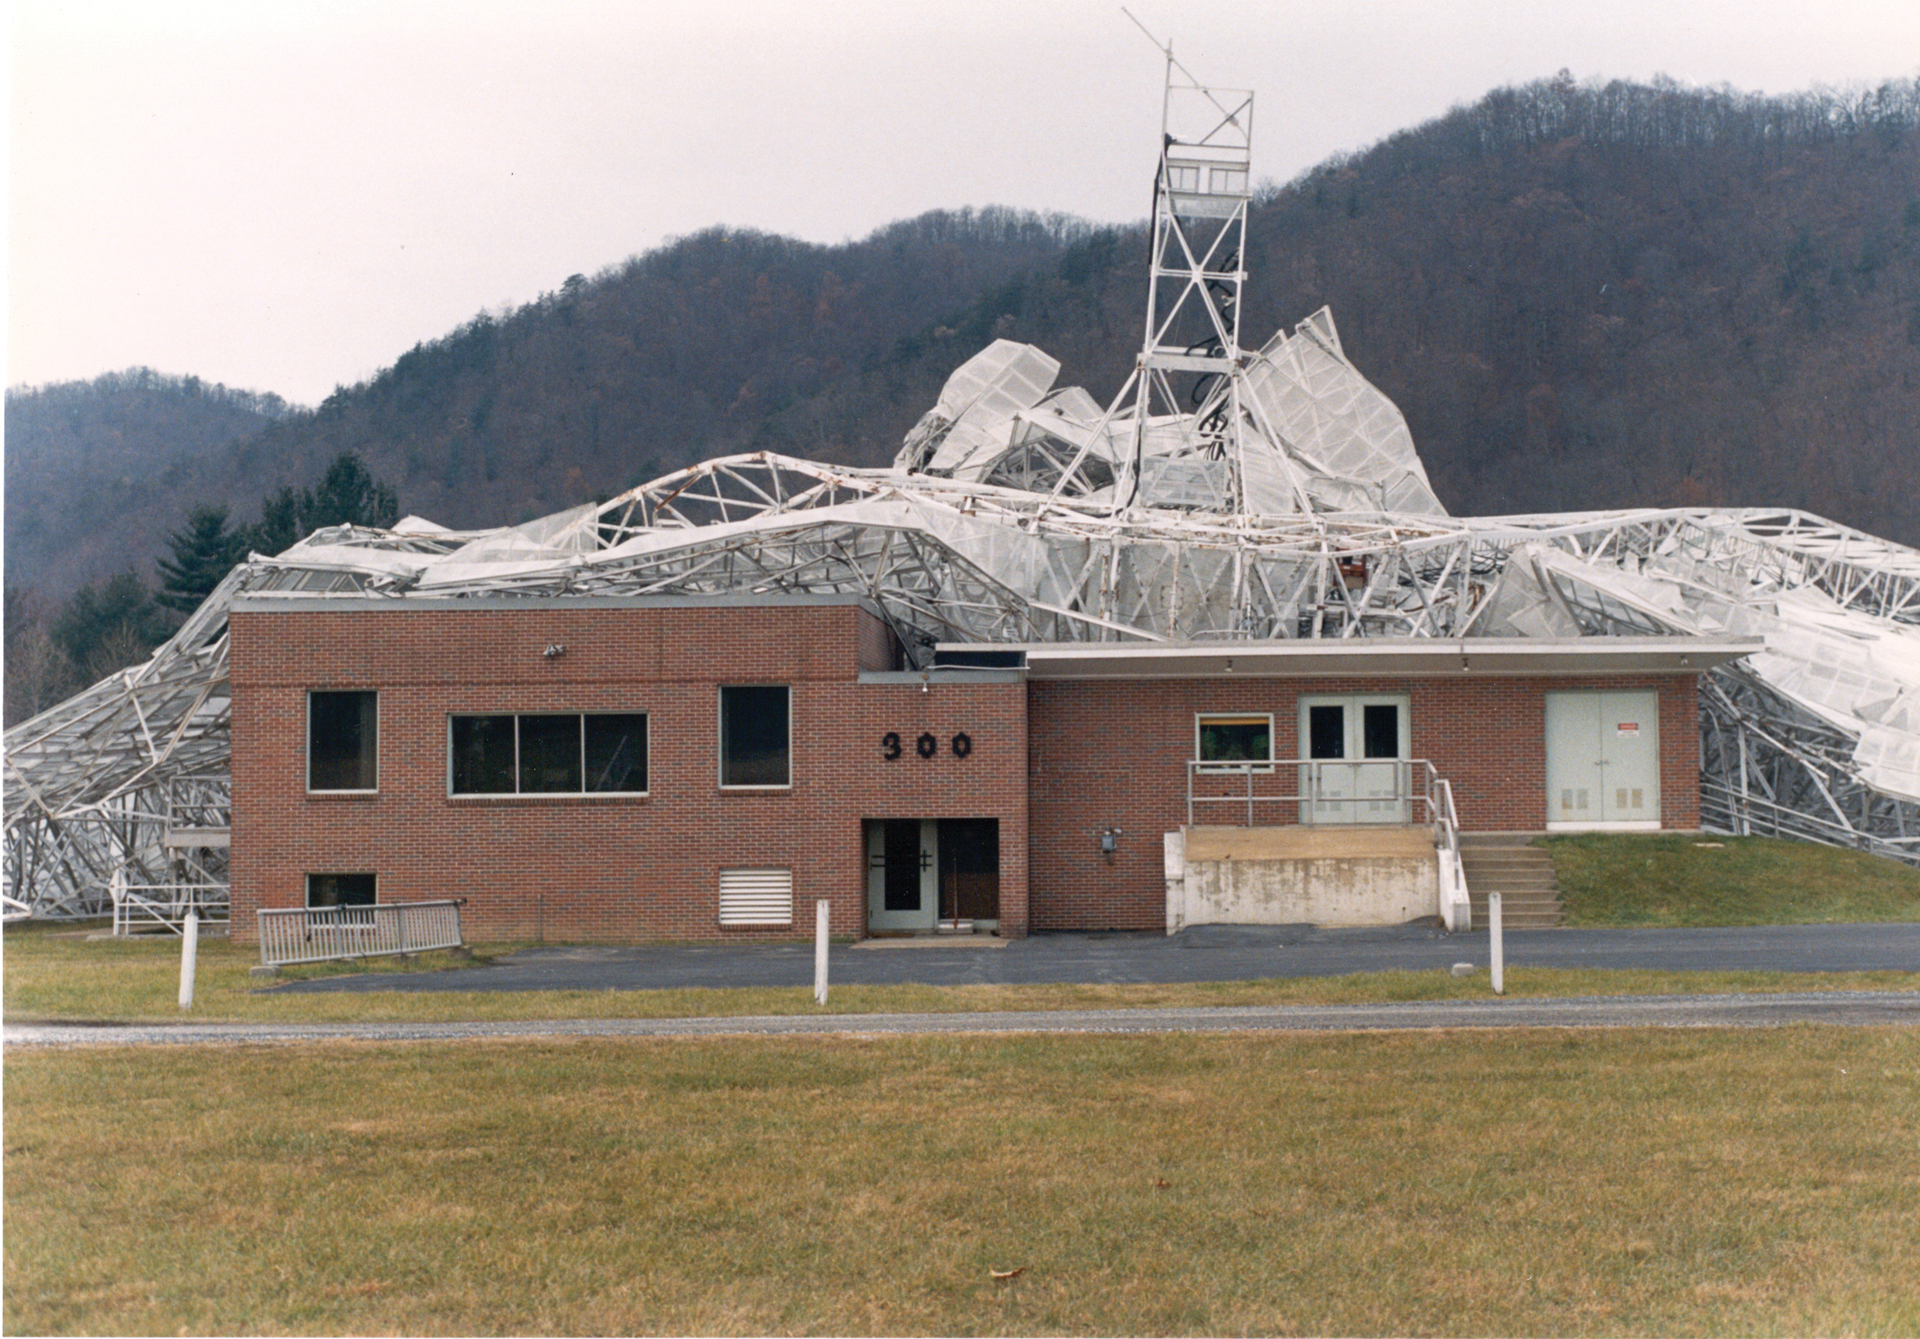 Collapsed 300-foot telescope